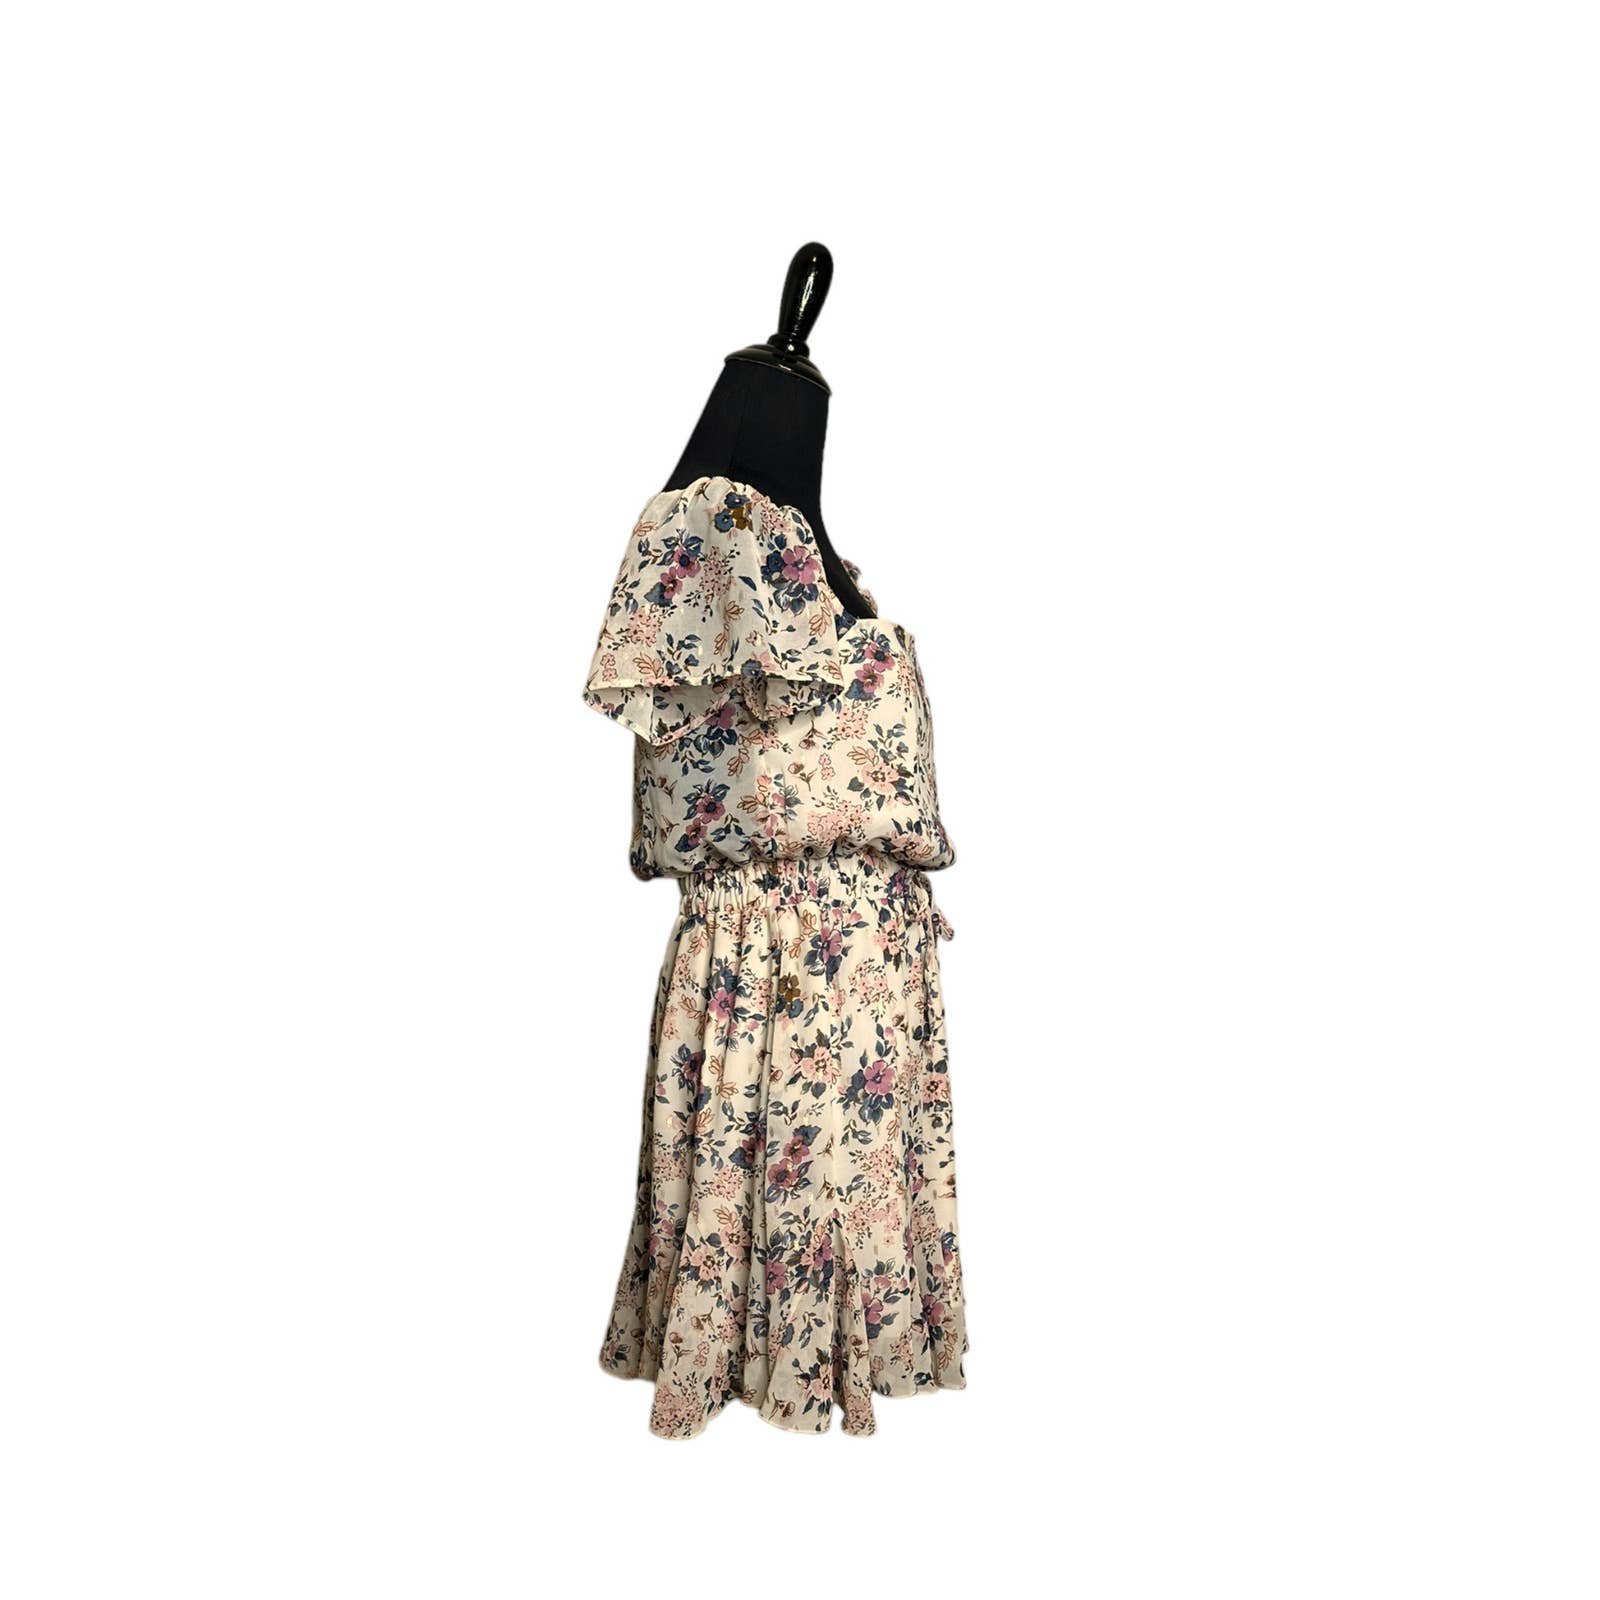 reasonable price Mi Ami beige pink floral print mini dress size Small Hwu9eOuwc hot sale